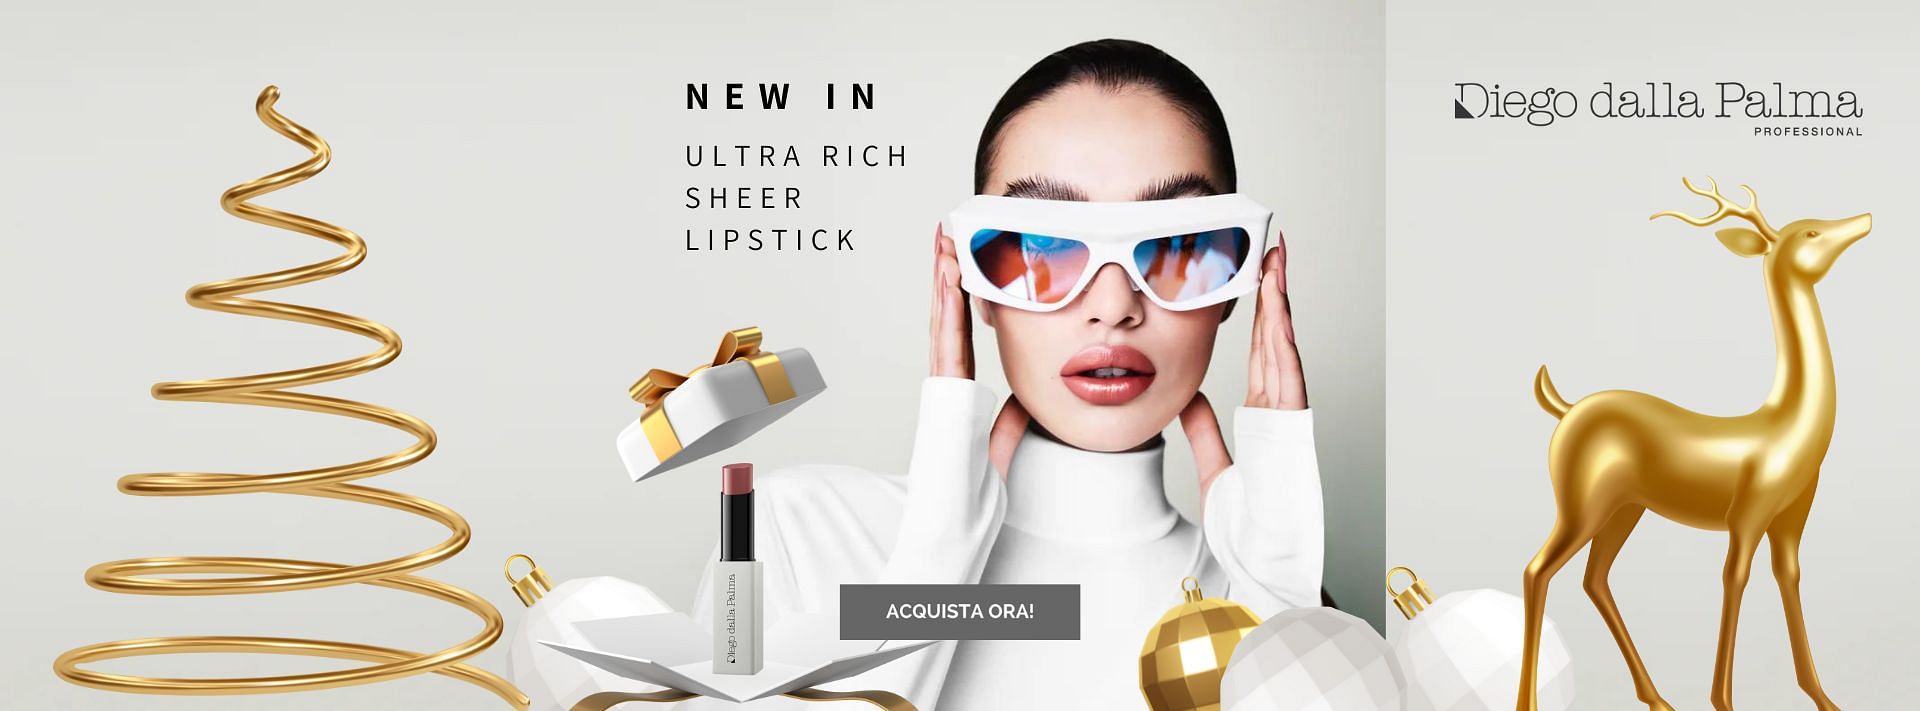 Diego Dalla Palma New Inn Ultra Rich Sheer Lipstick